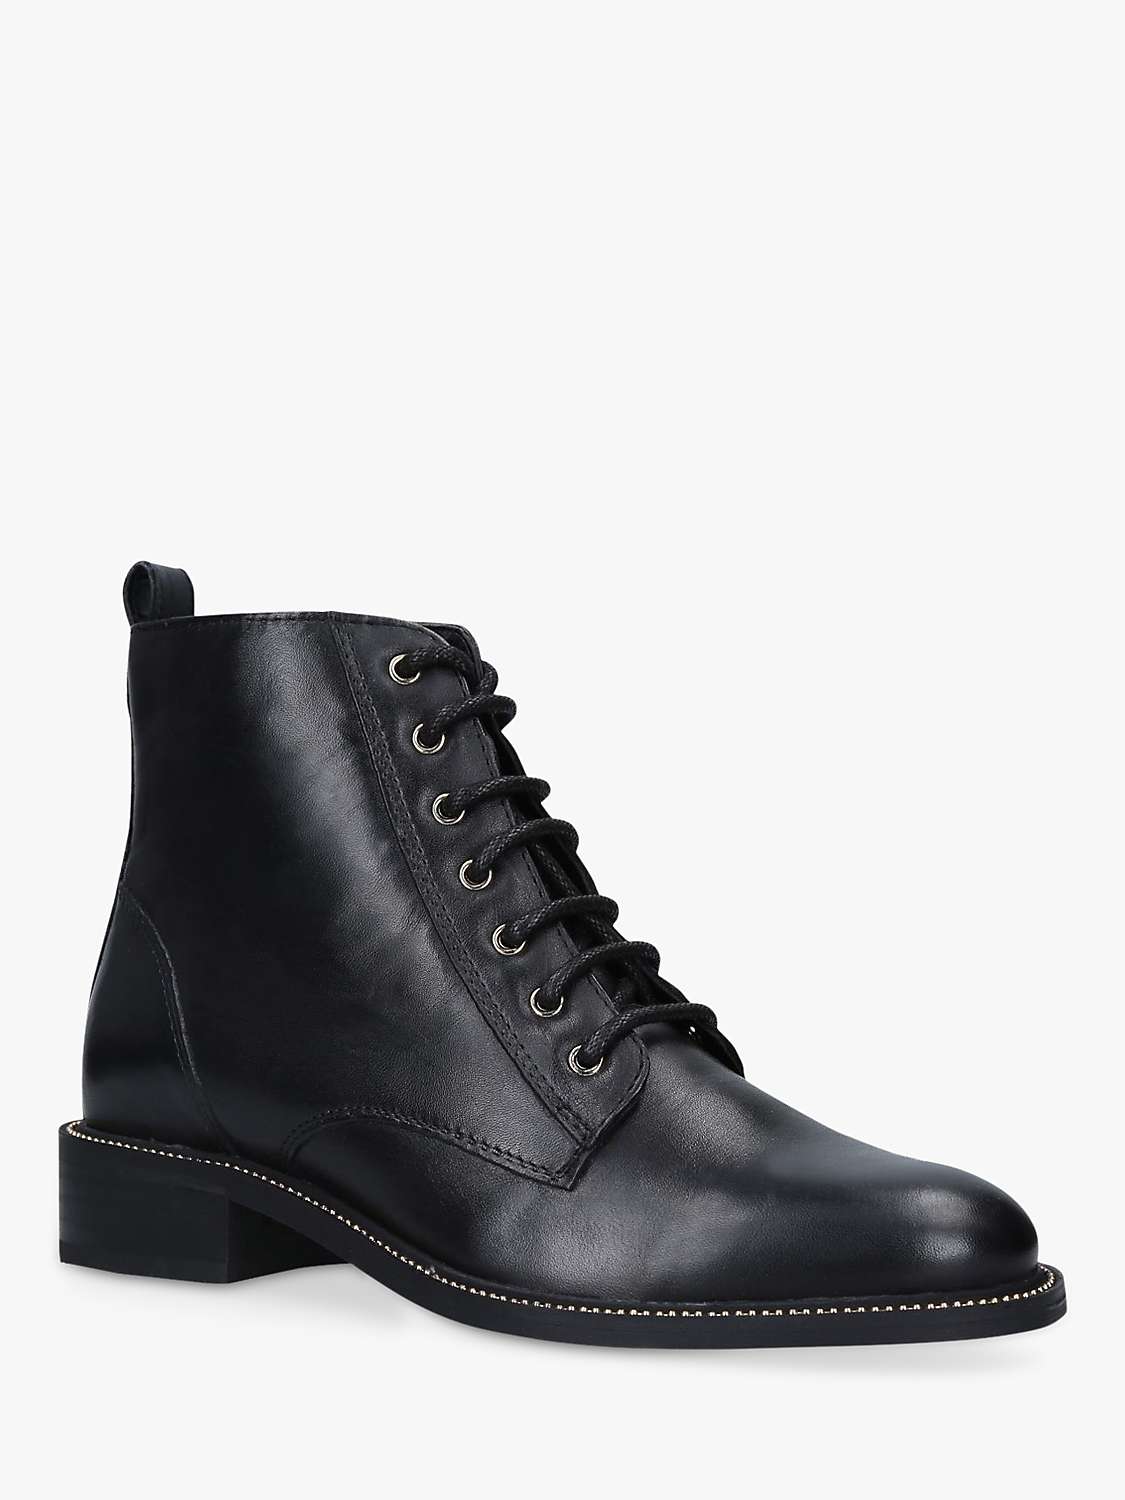 Buy Carvela Spike Stud Detail Leather Ankle Boots Online at johnlewis.com